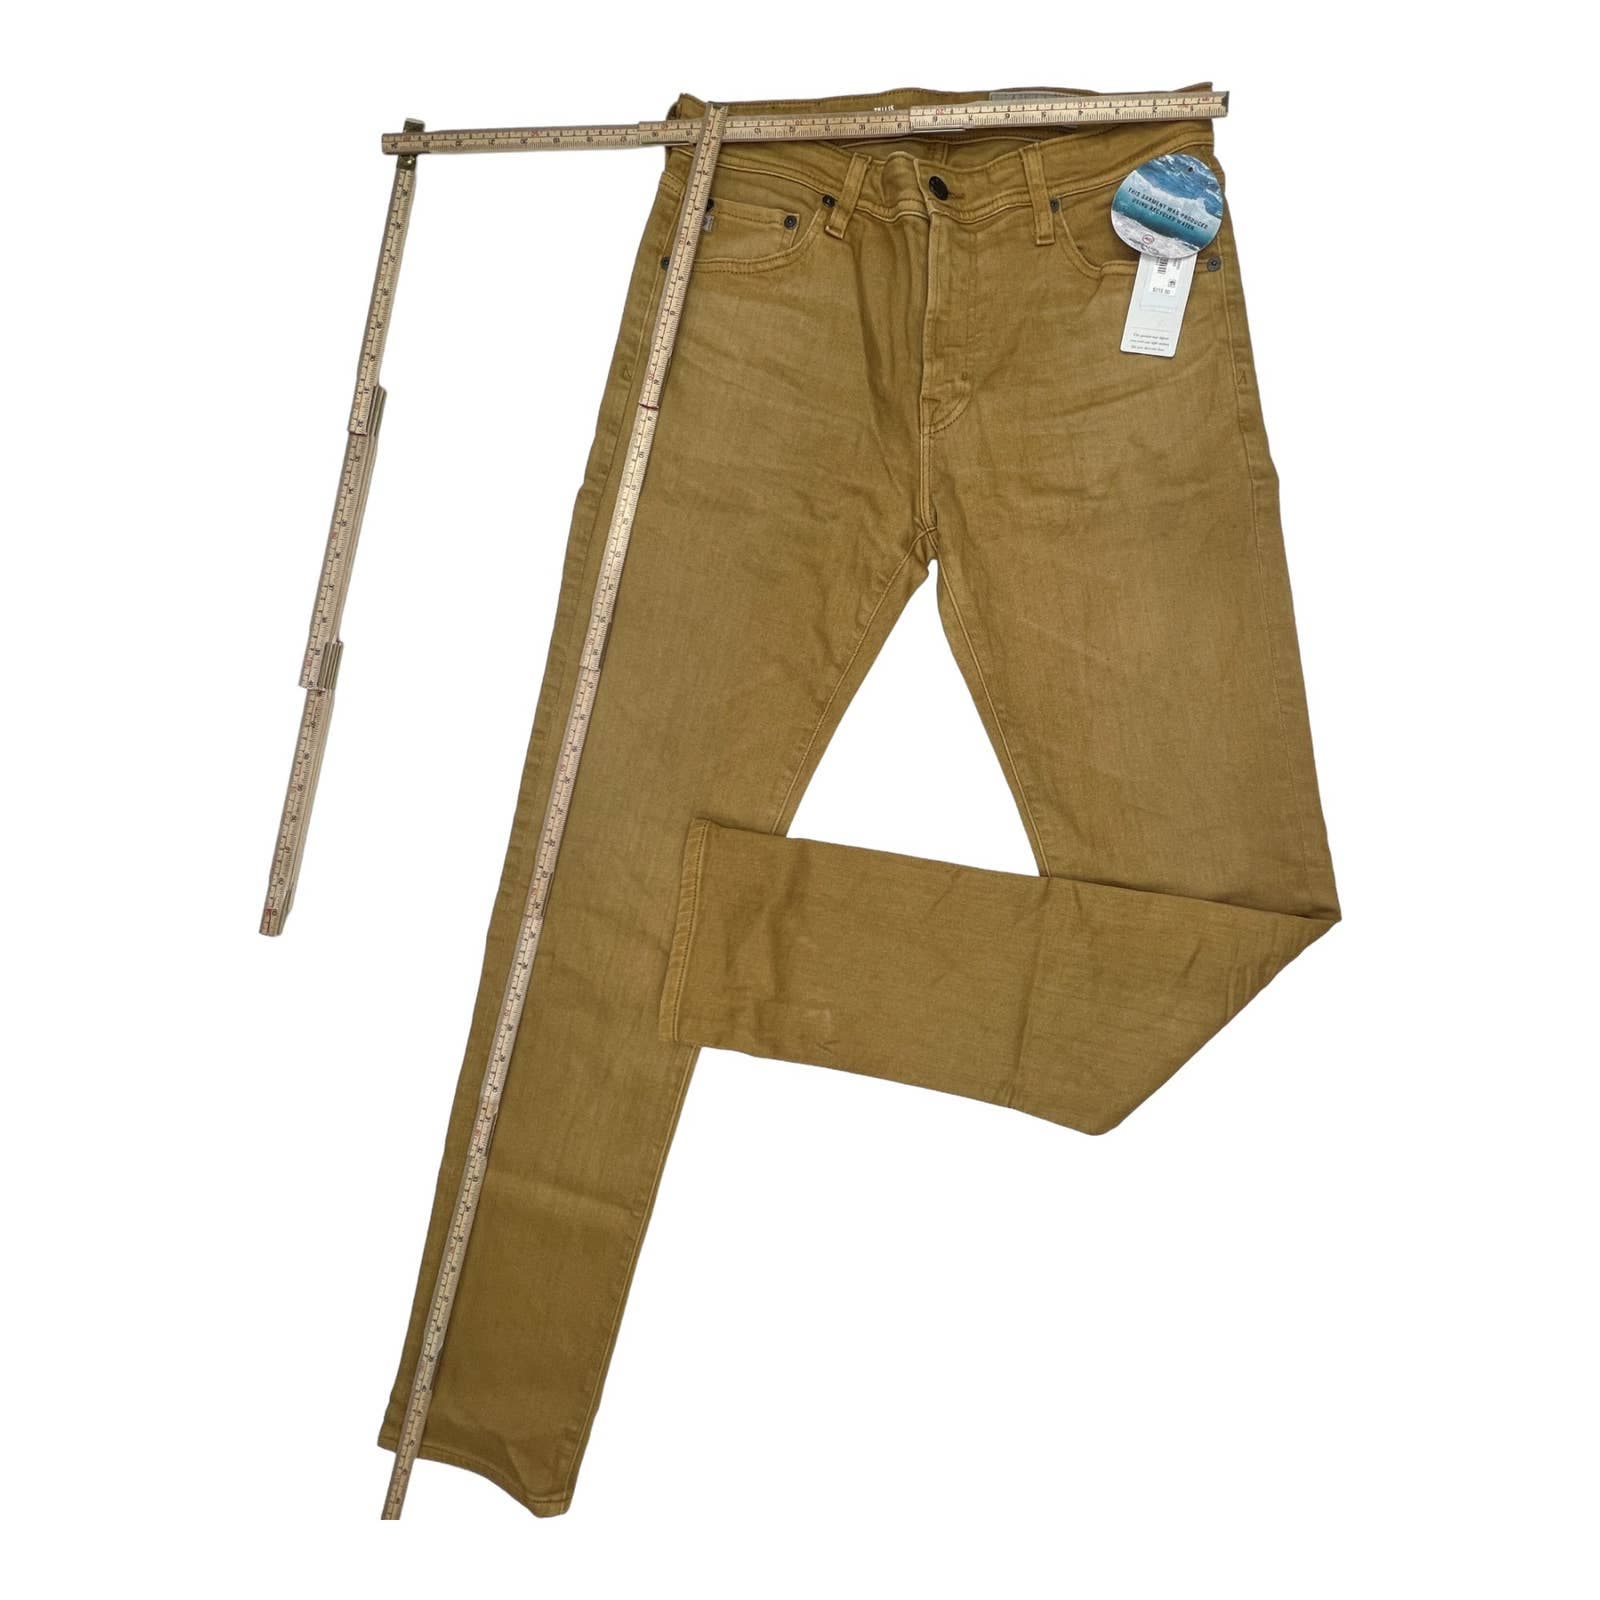 AG-ED Denim Tellis Men Brown Jeans US 32 Slim Fit Casual Cotton